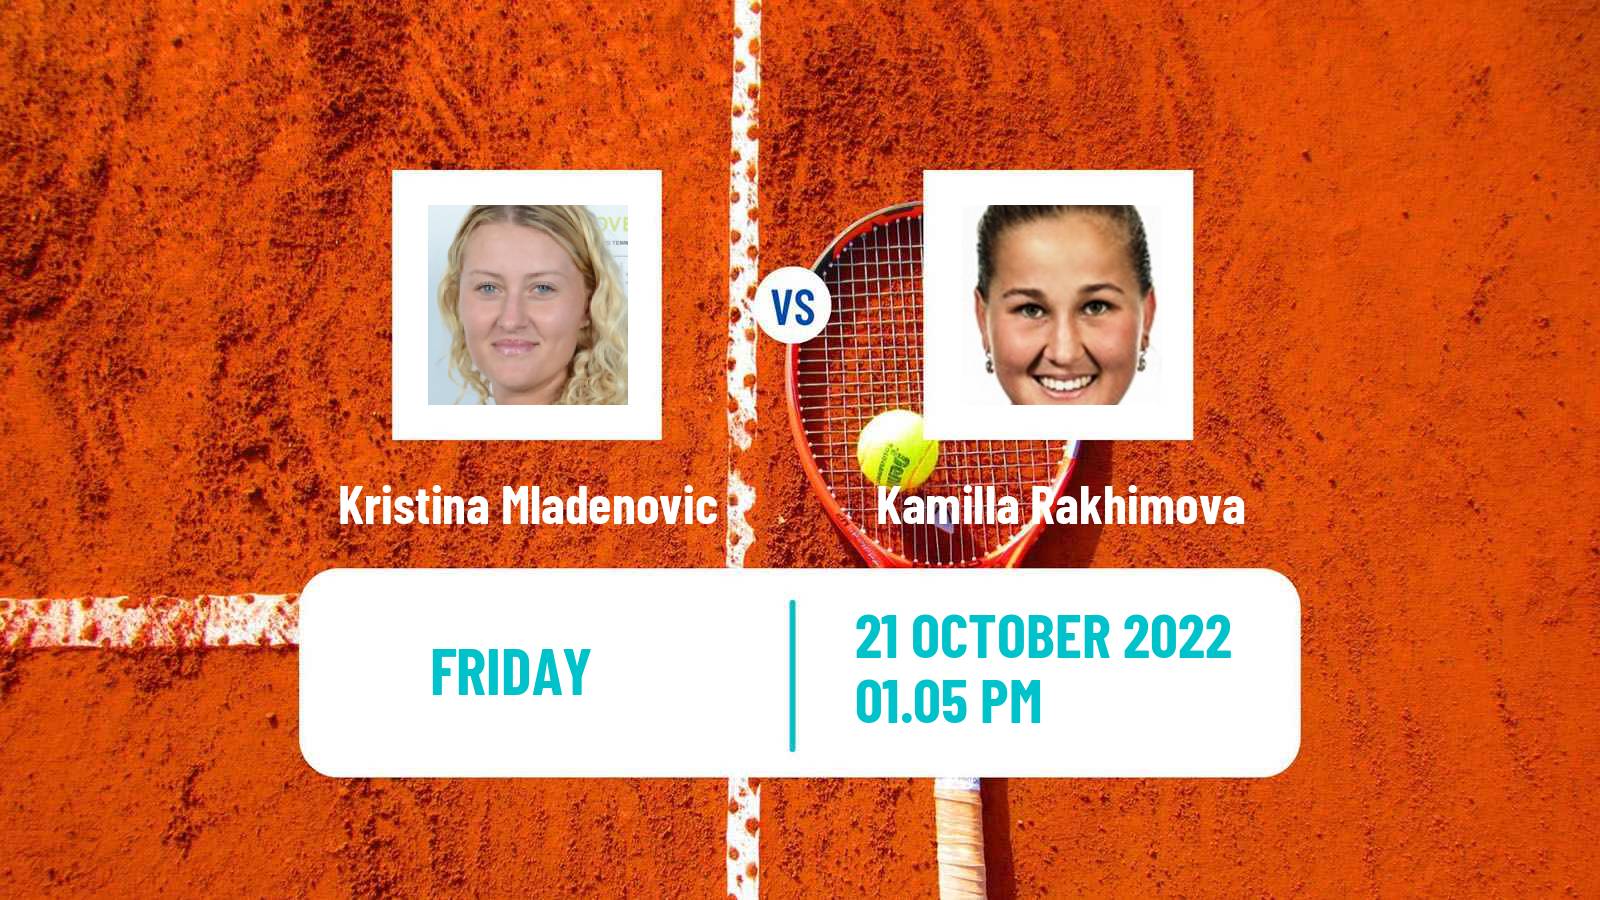 Tennis ATP Challenger Kristina Mladenovic - Kamilla Rakhimova